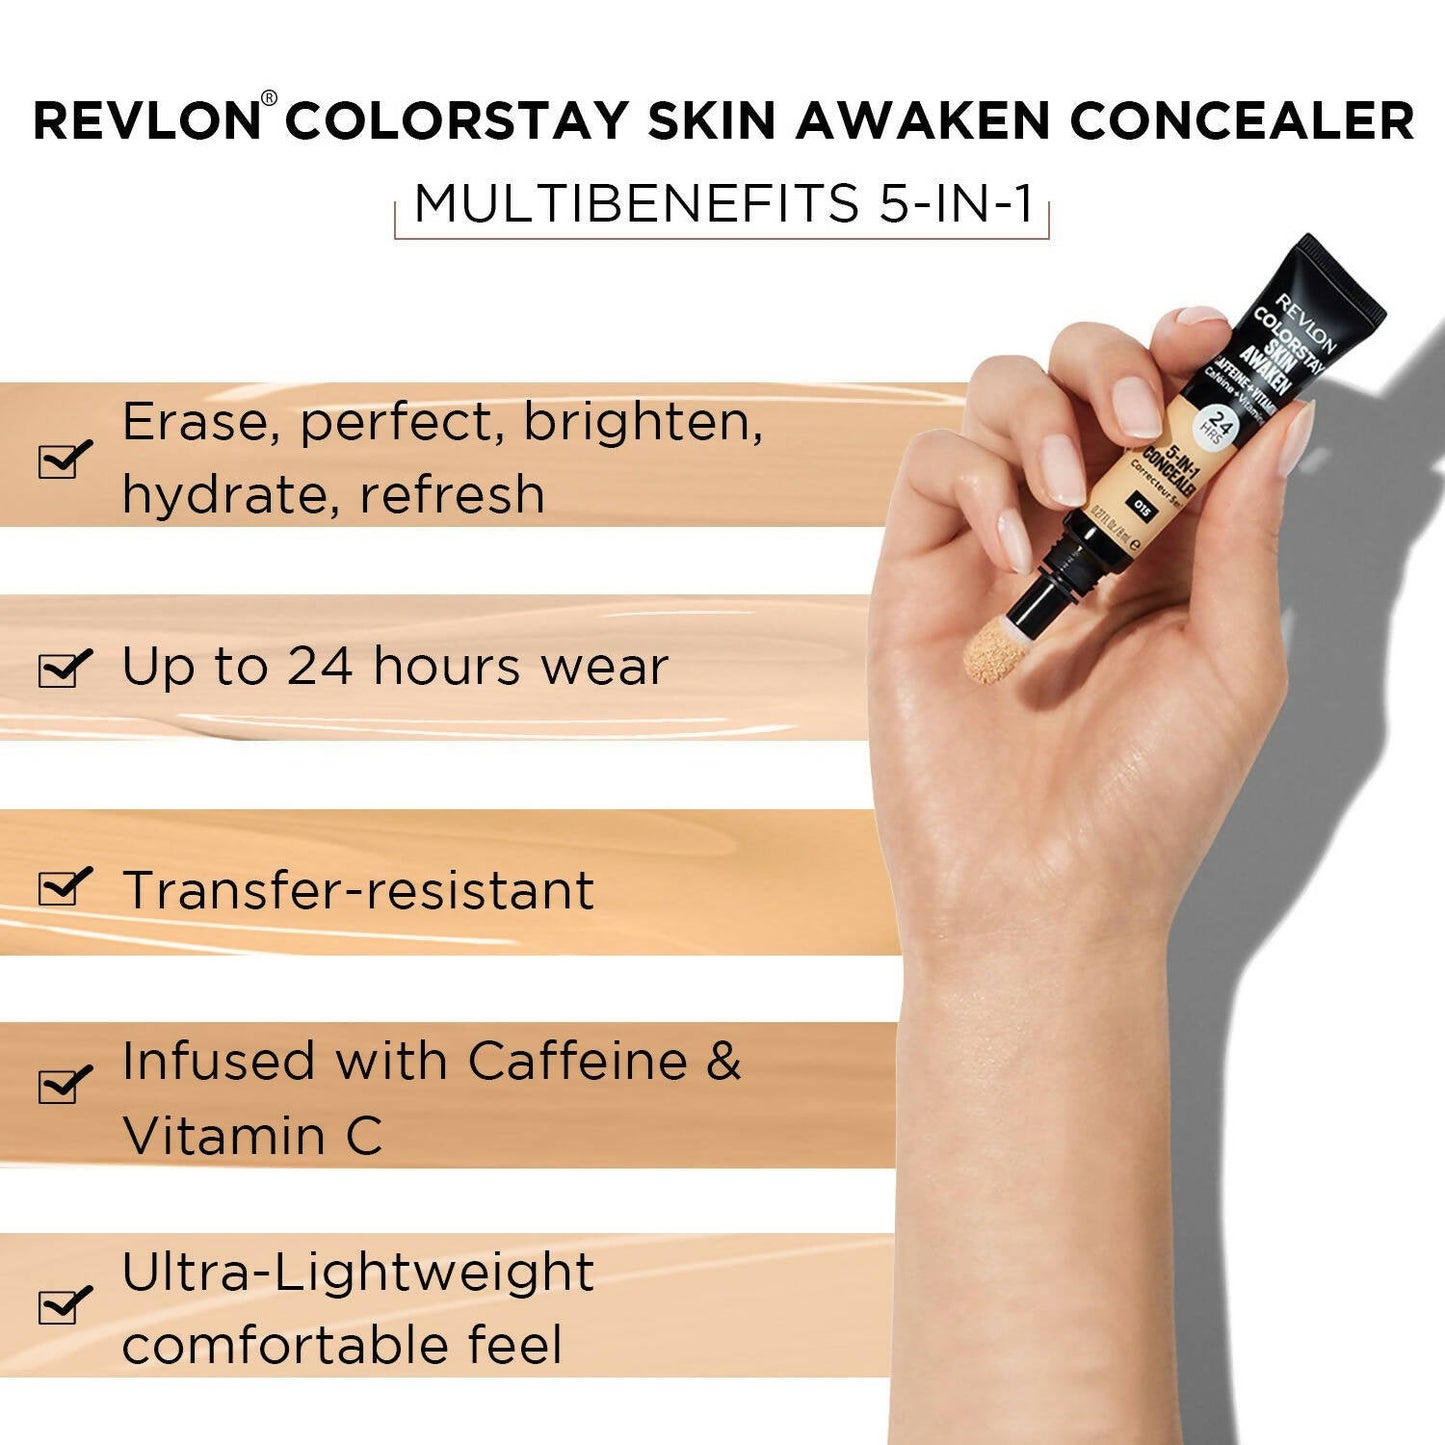 Revlon Colorstay Skin Awaken 5-in-1 Concealer - Fair